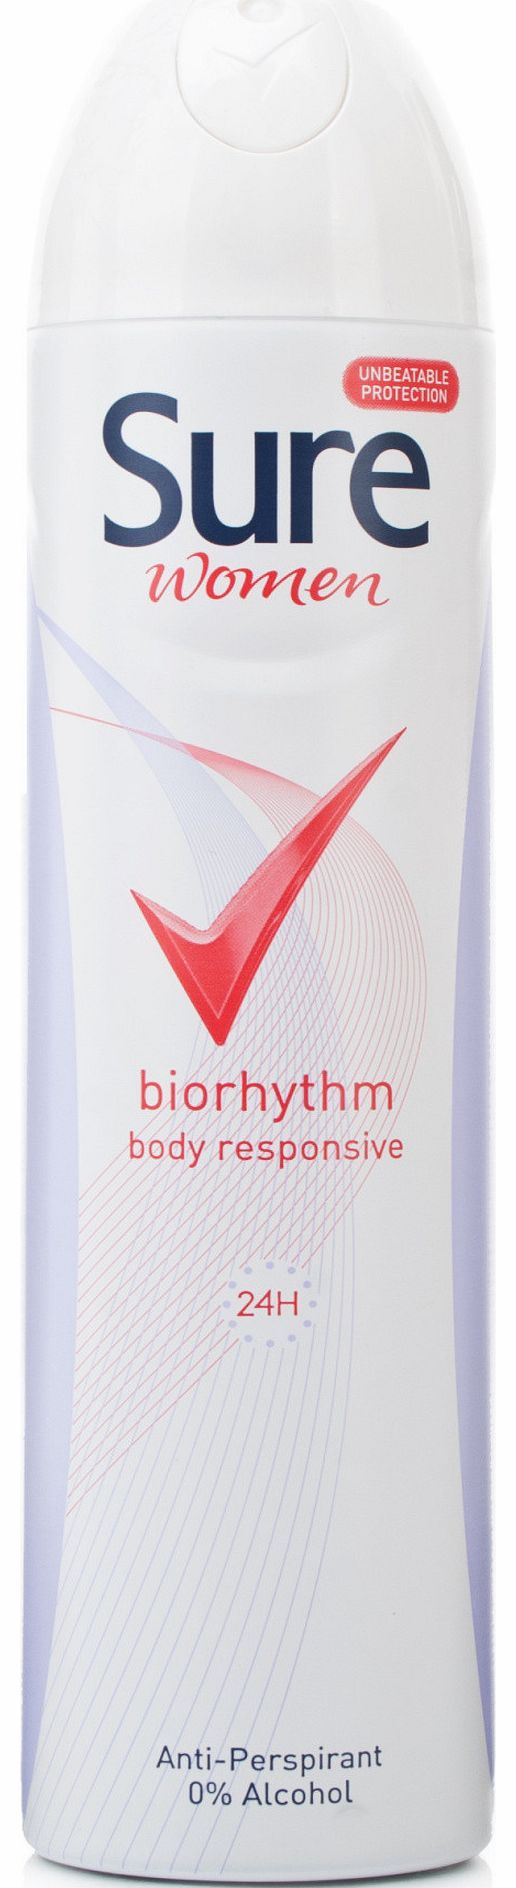 Sure Women Biorhythm Dry 24h Active